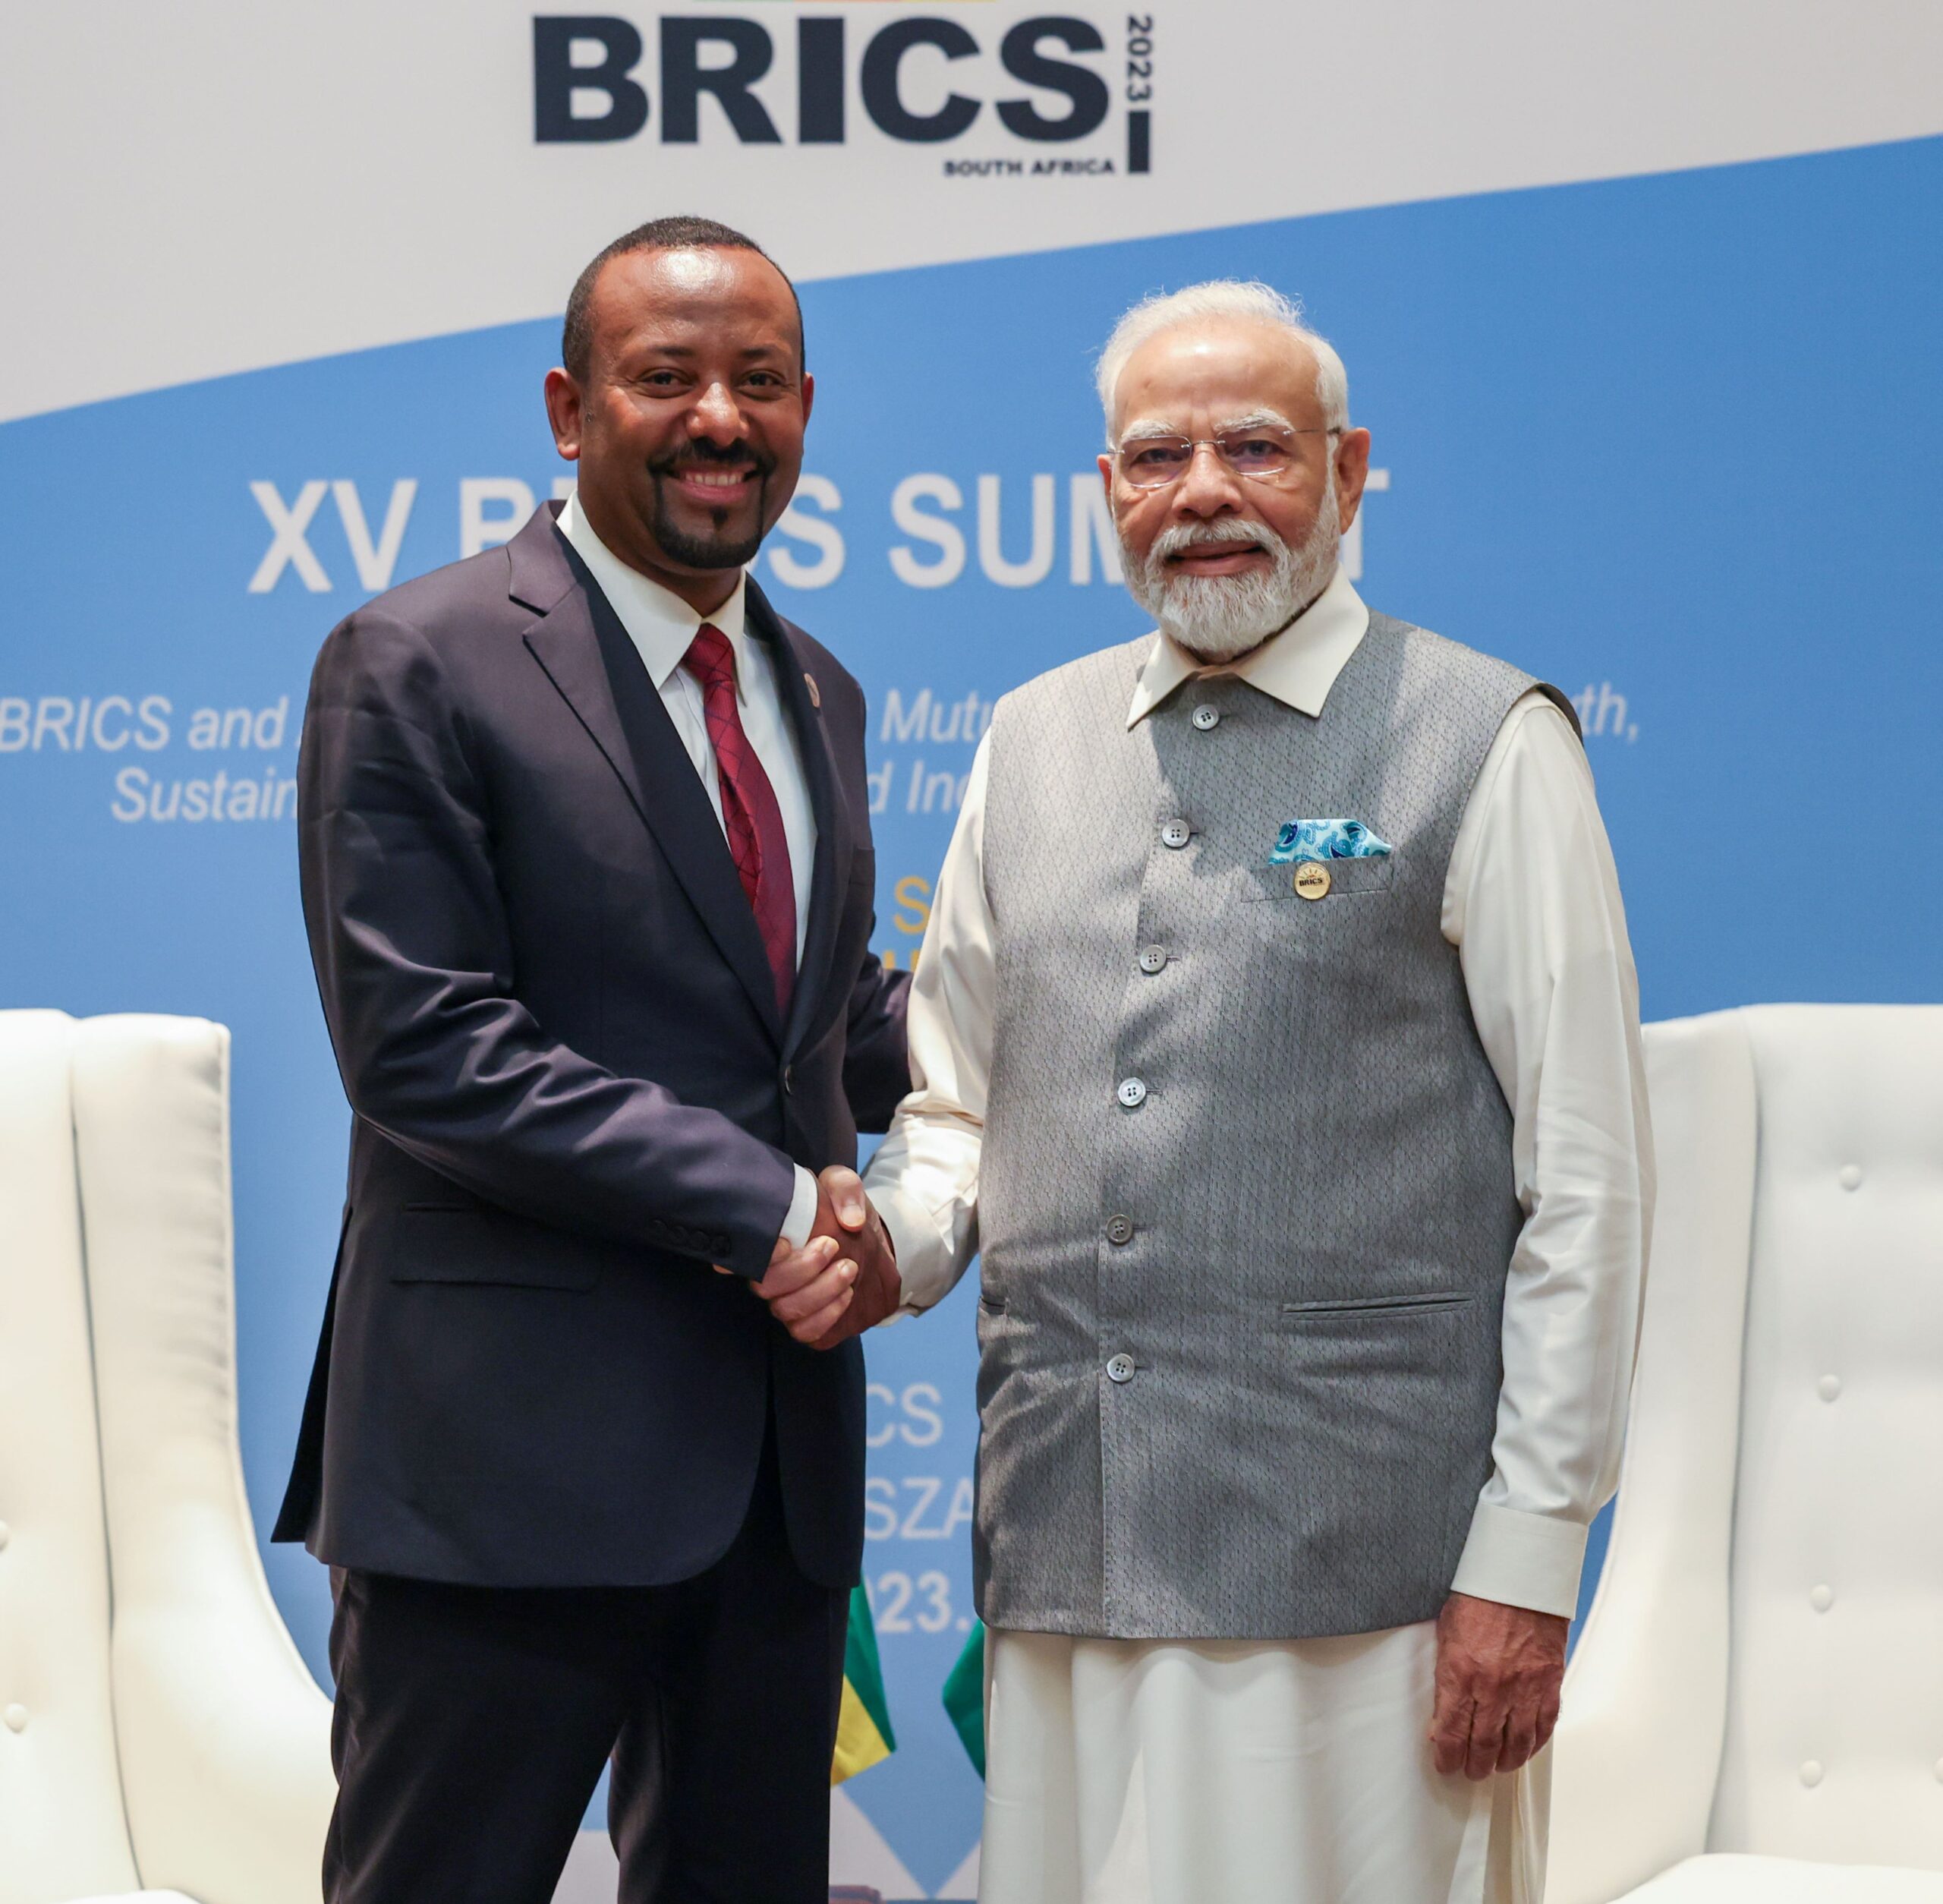 Ethipia is one of the new members of BRICS